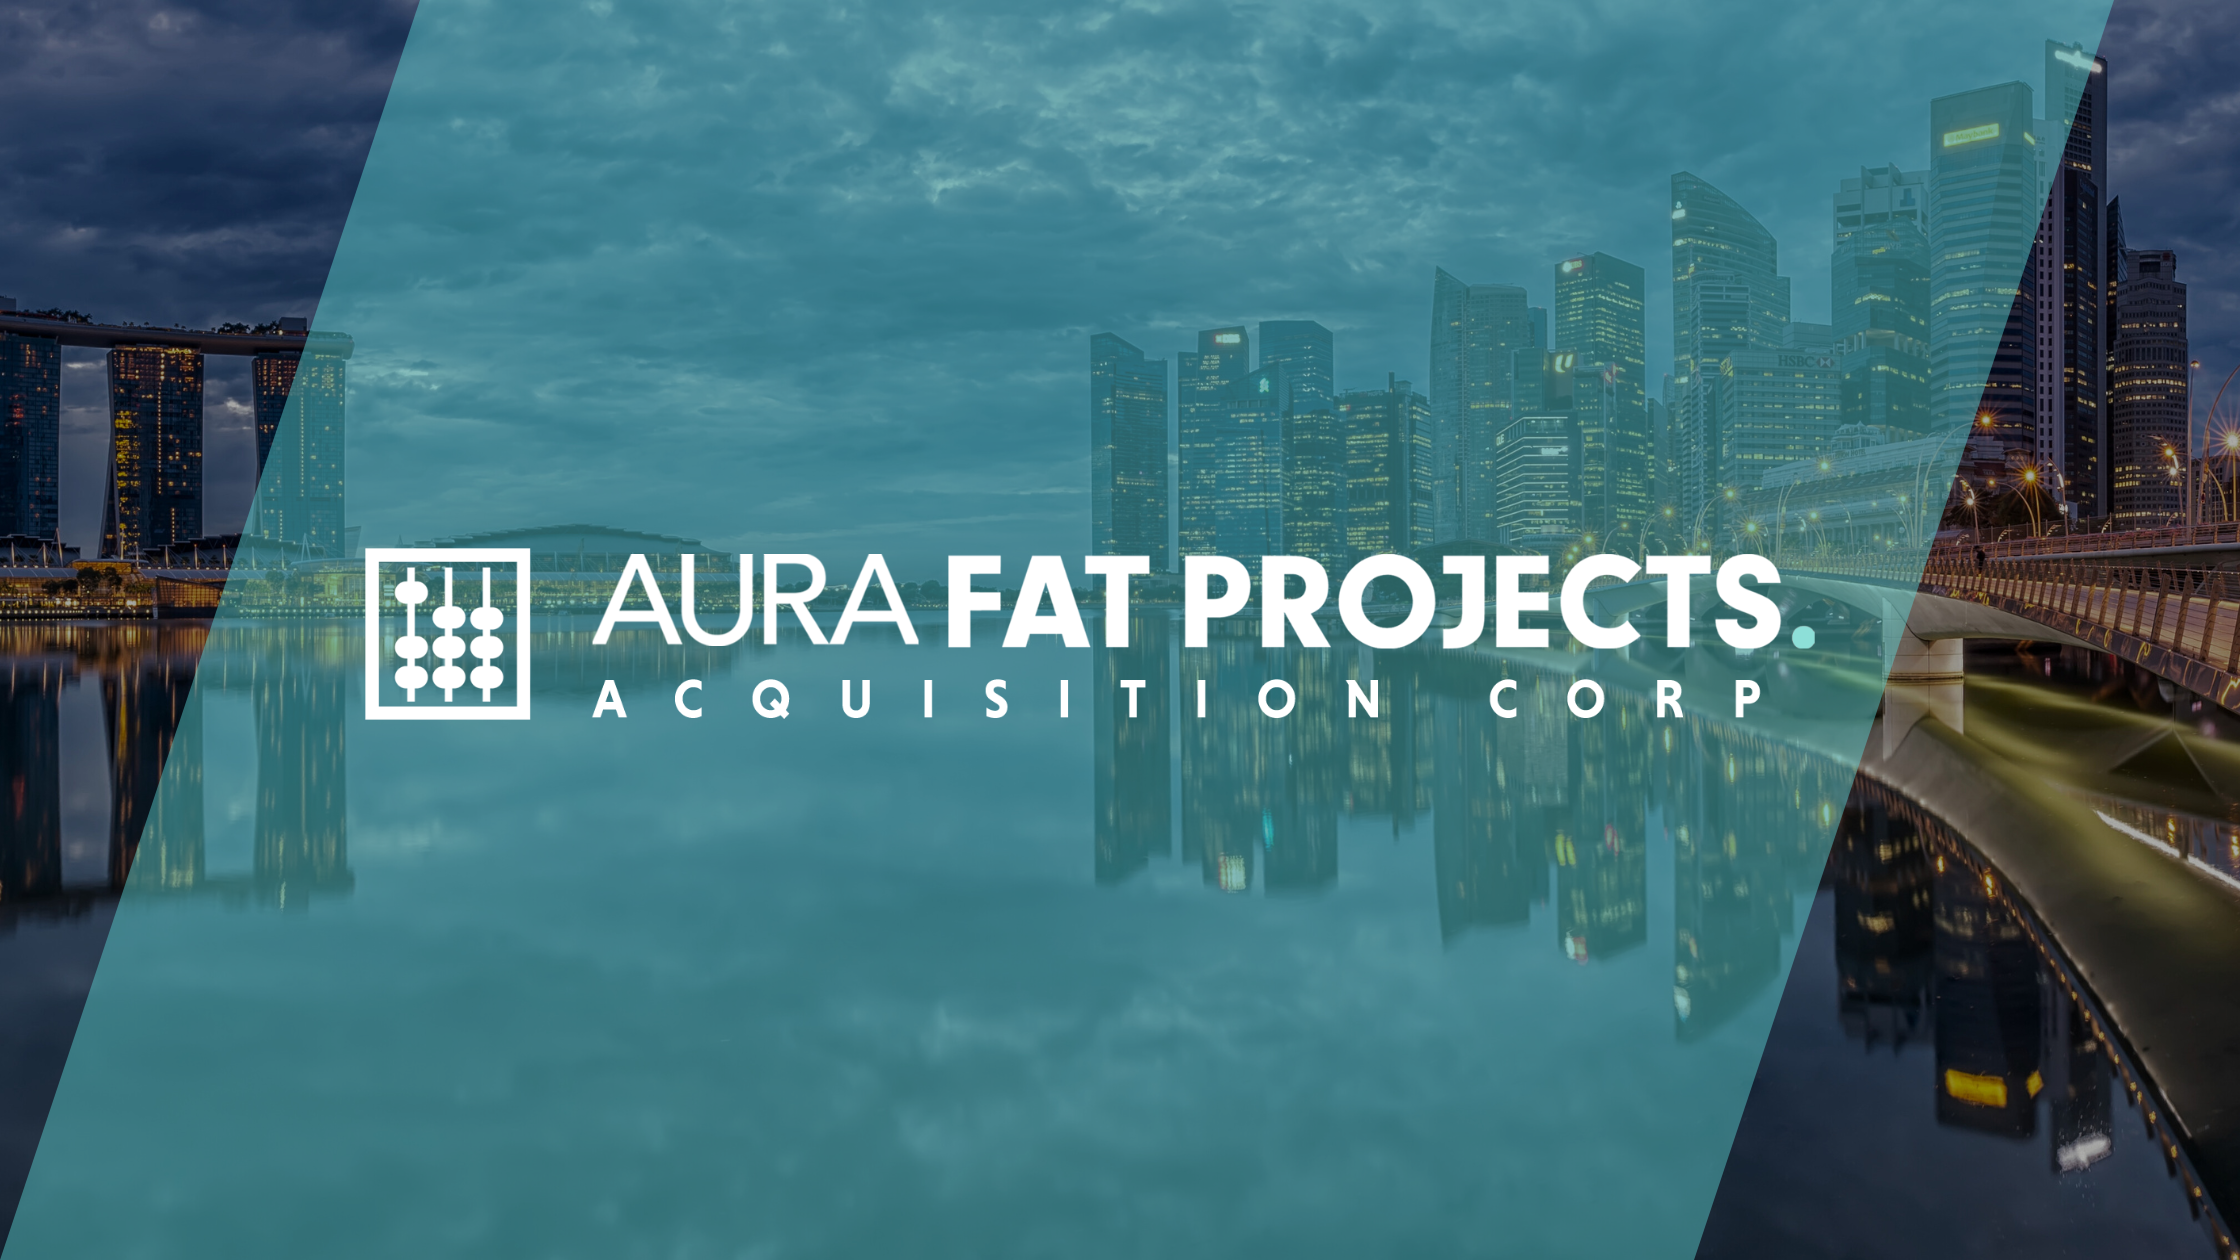 Aura Fat Projects Acquisition Corp logo against Singapore skyline